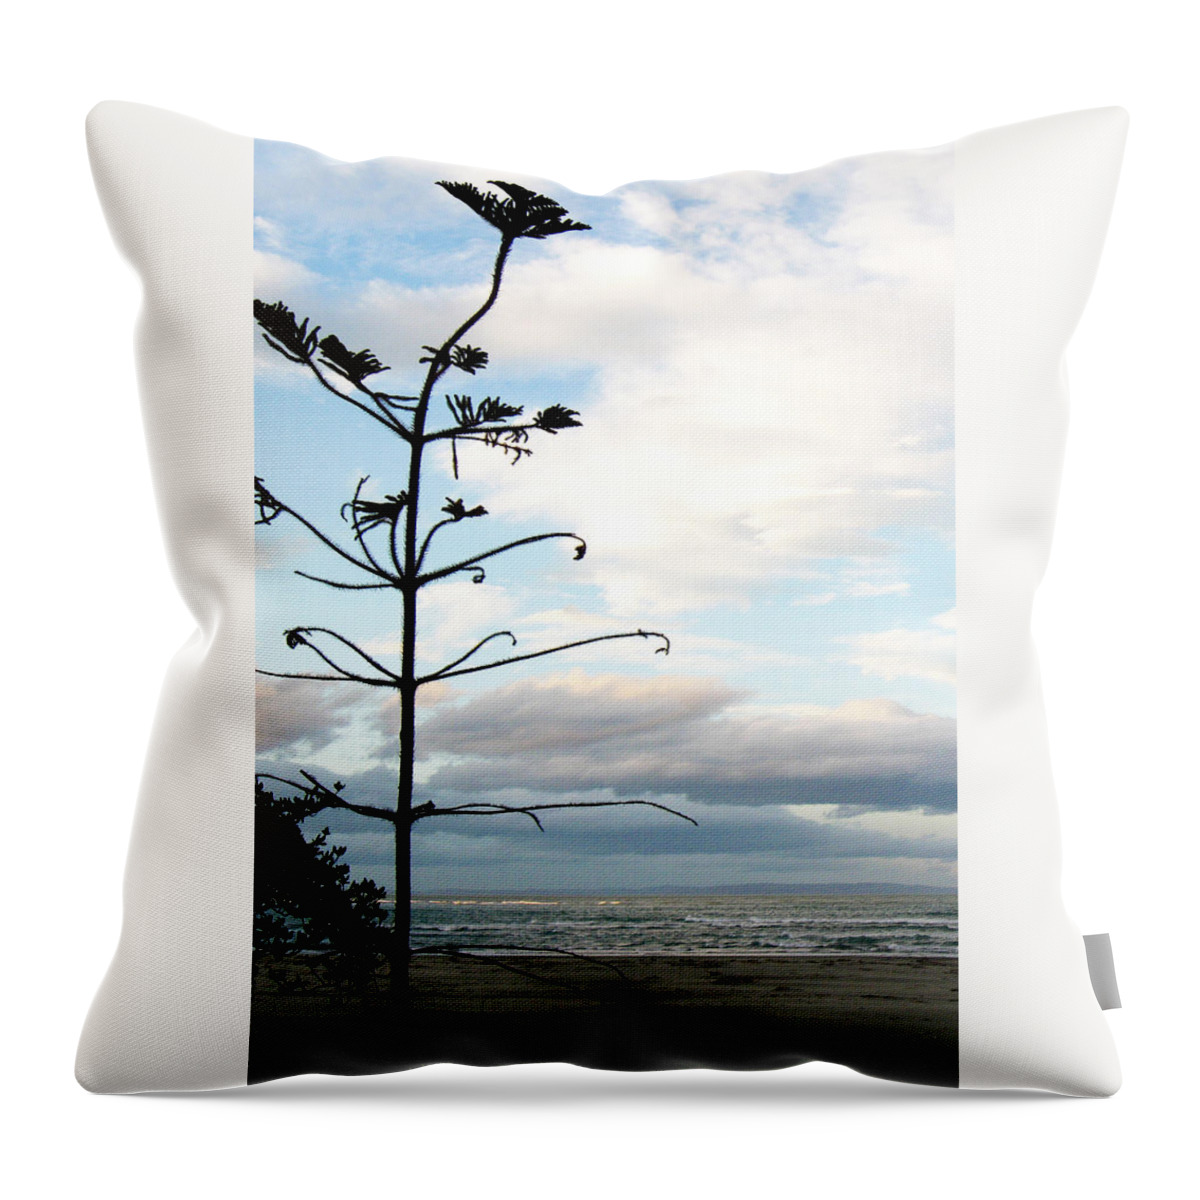 Sumner Beach Throw Pillow featuring the photograph Beach View by Roseanne Jones